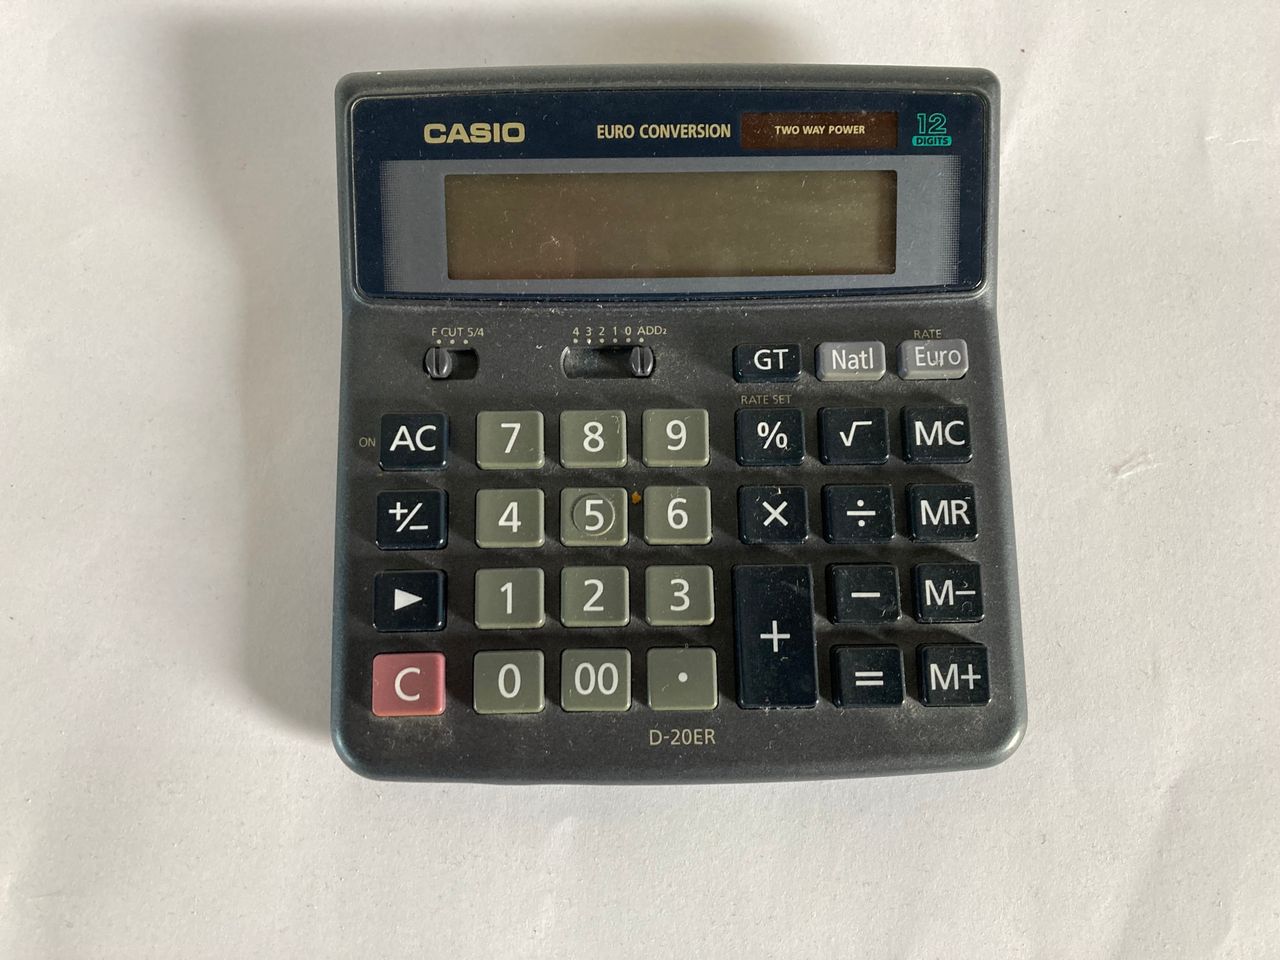 euro conversion Kalkulator FINN torget